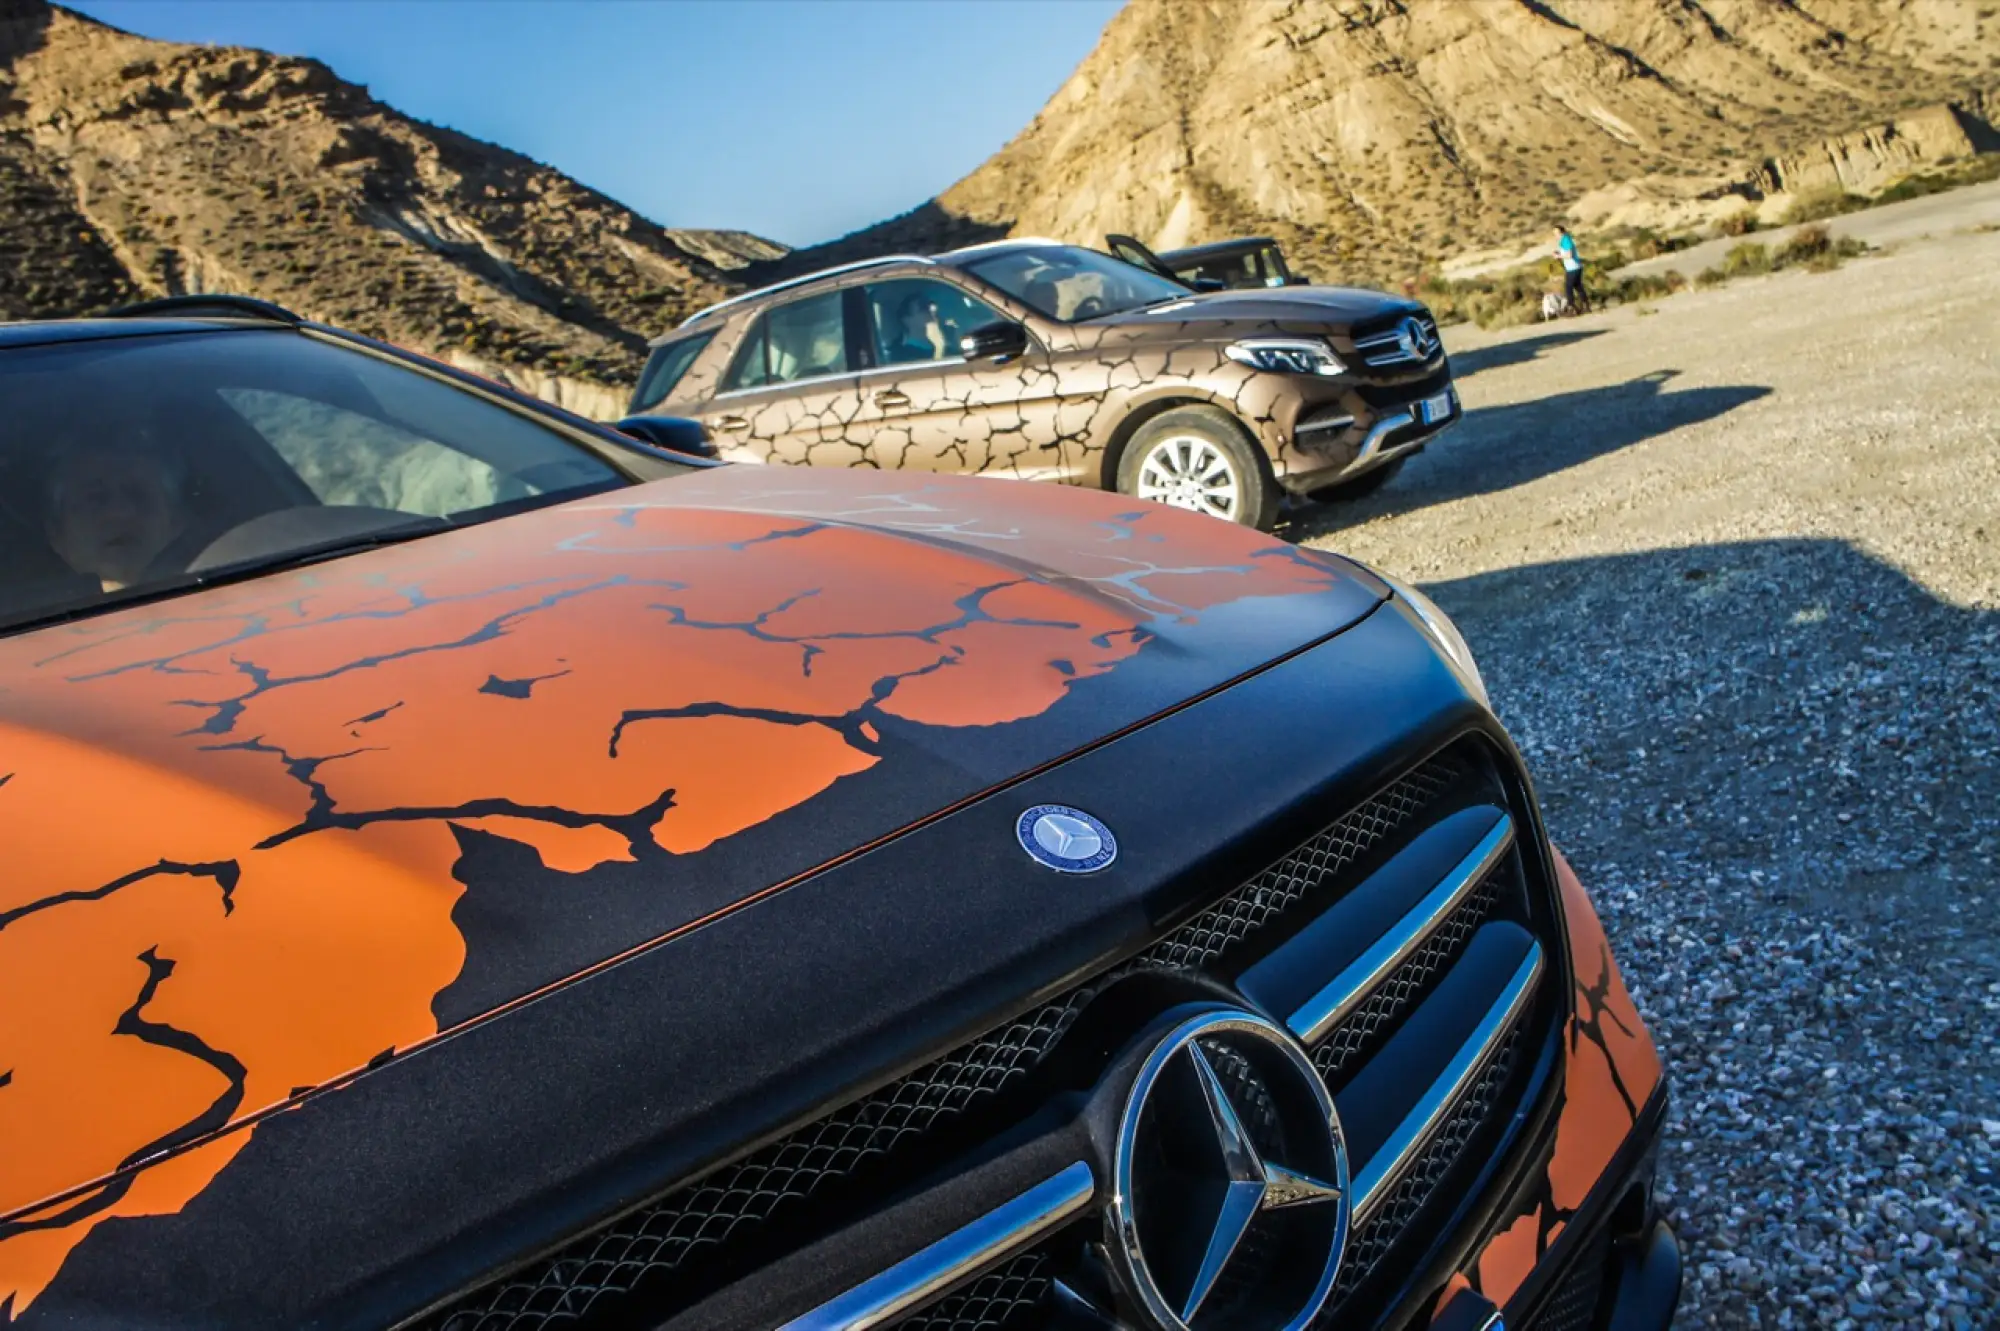 Mercedes SUV Attack Desert Test Drive - 2